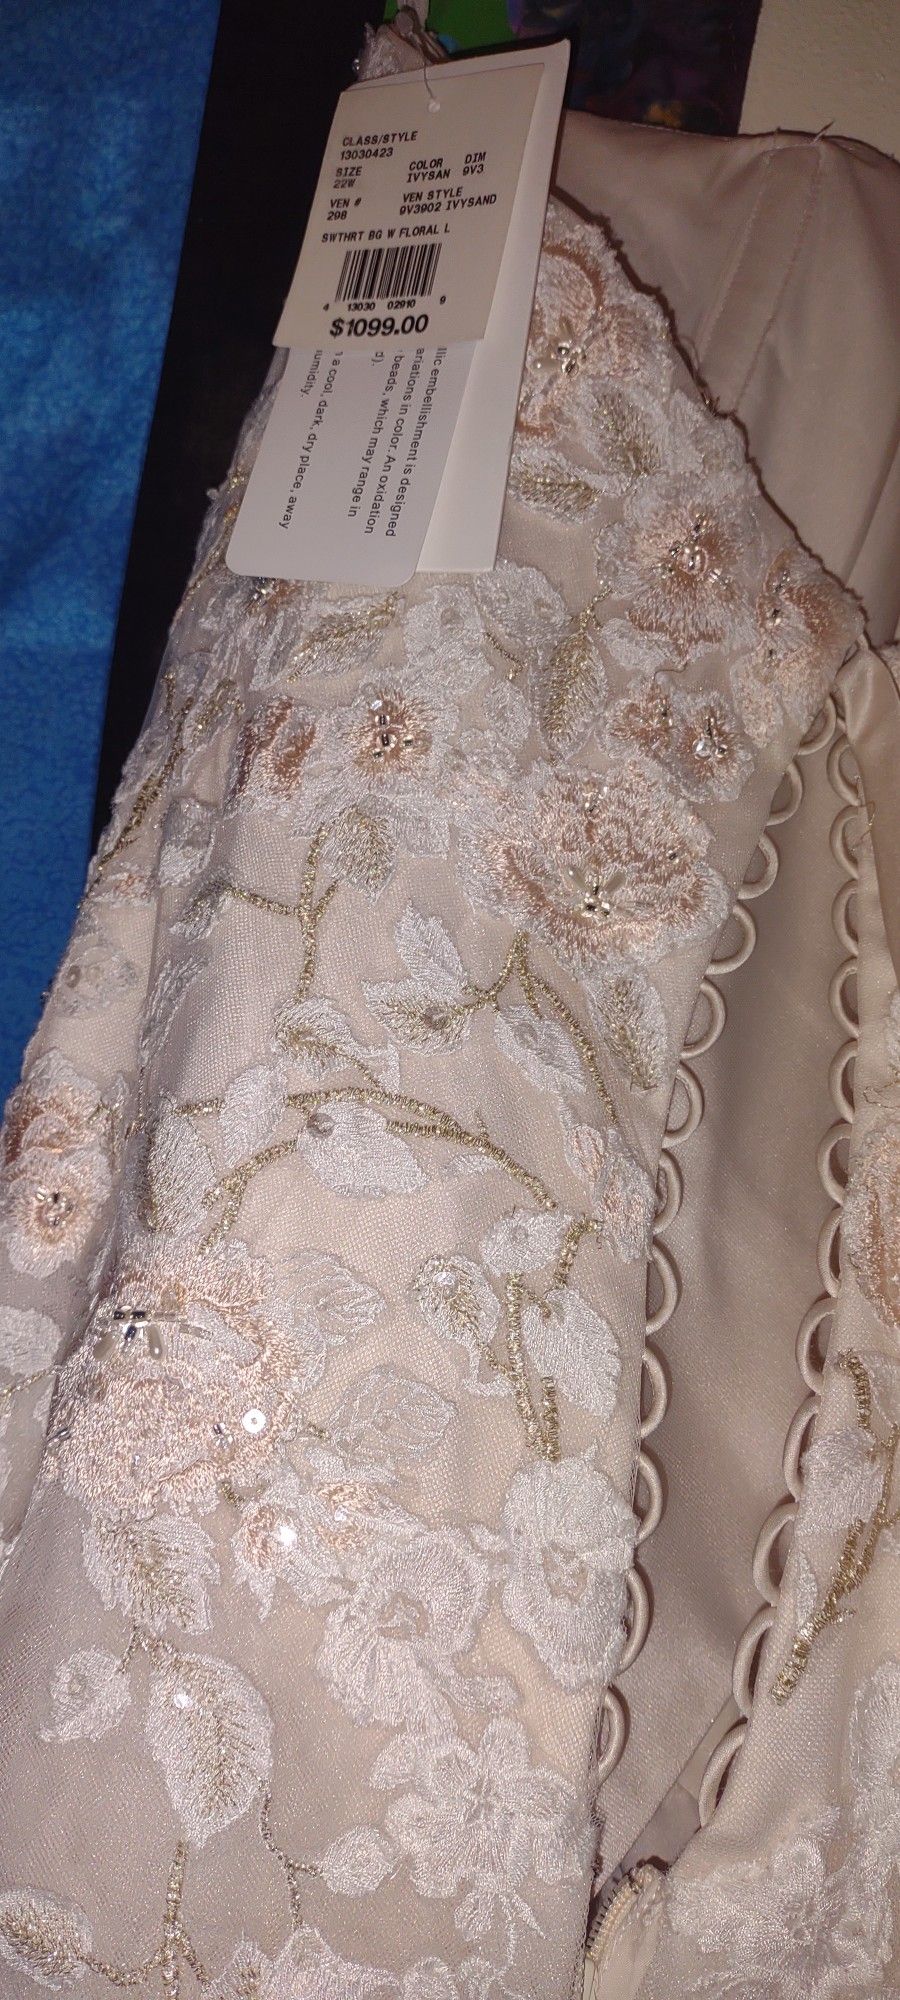 Davids Bridal Wedding Gown Never Worn